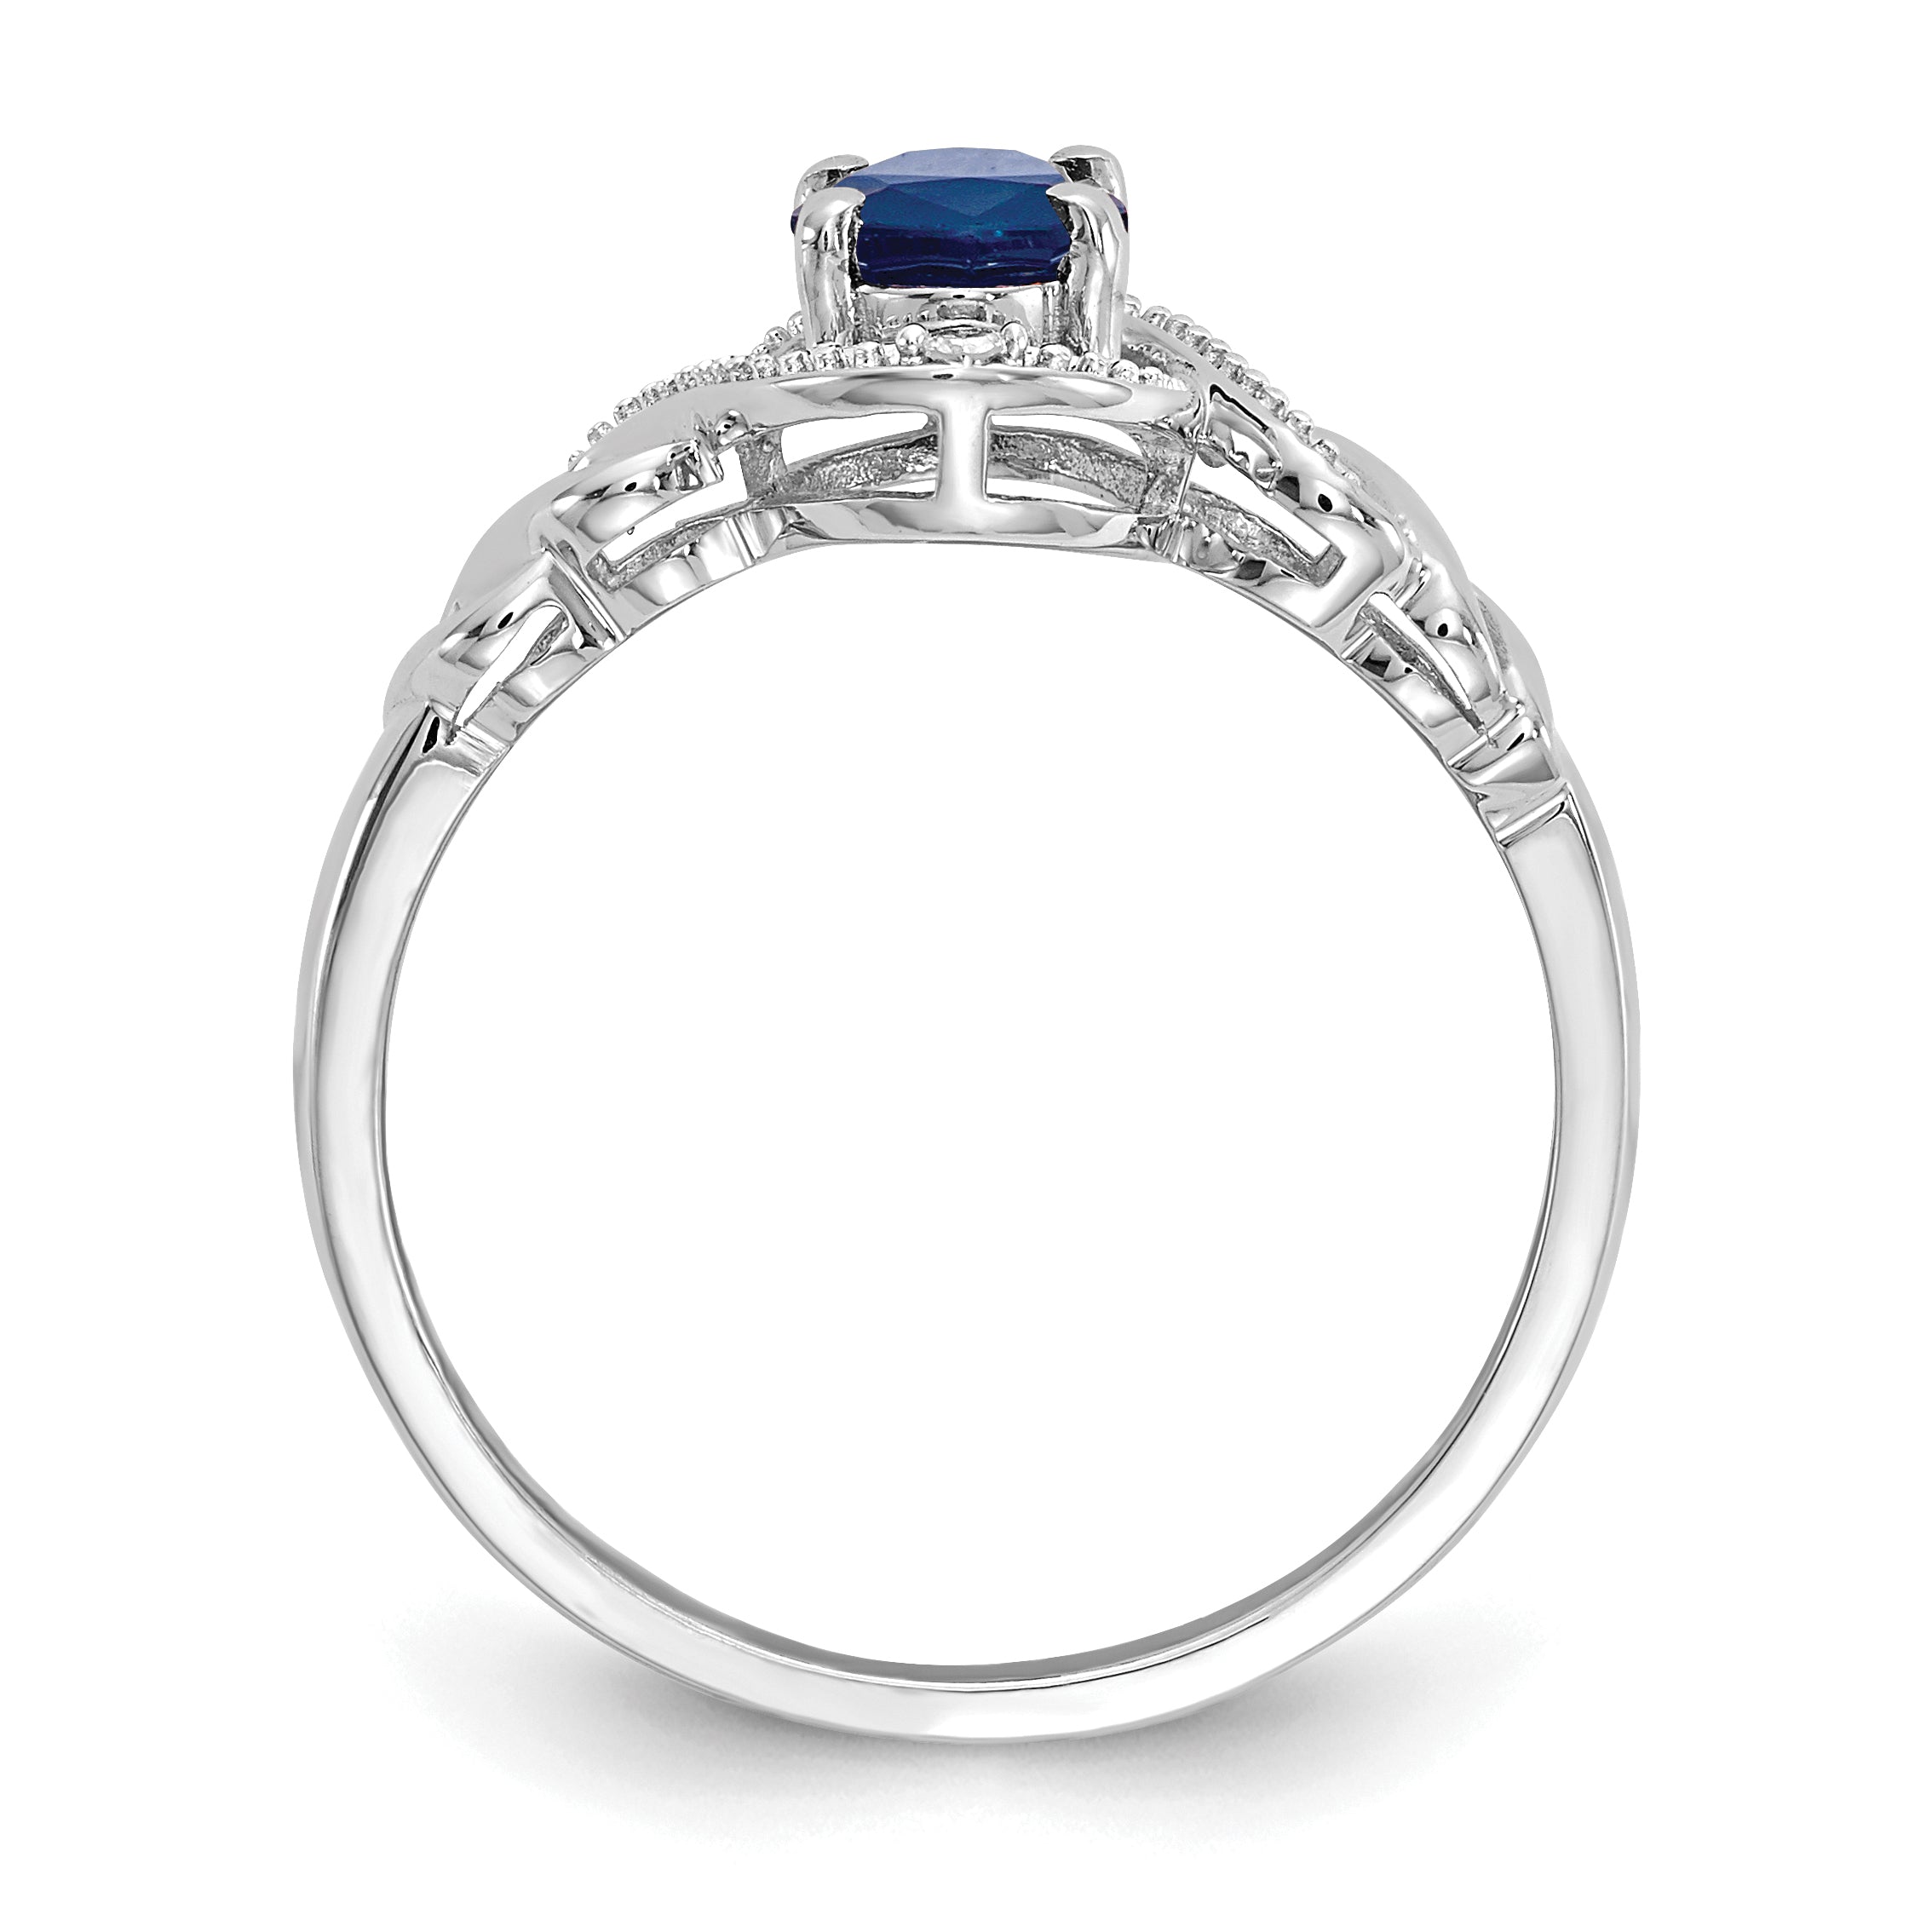 10k White Gold Sapphire and Diamond Ring